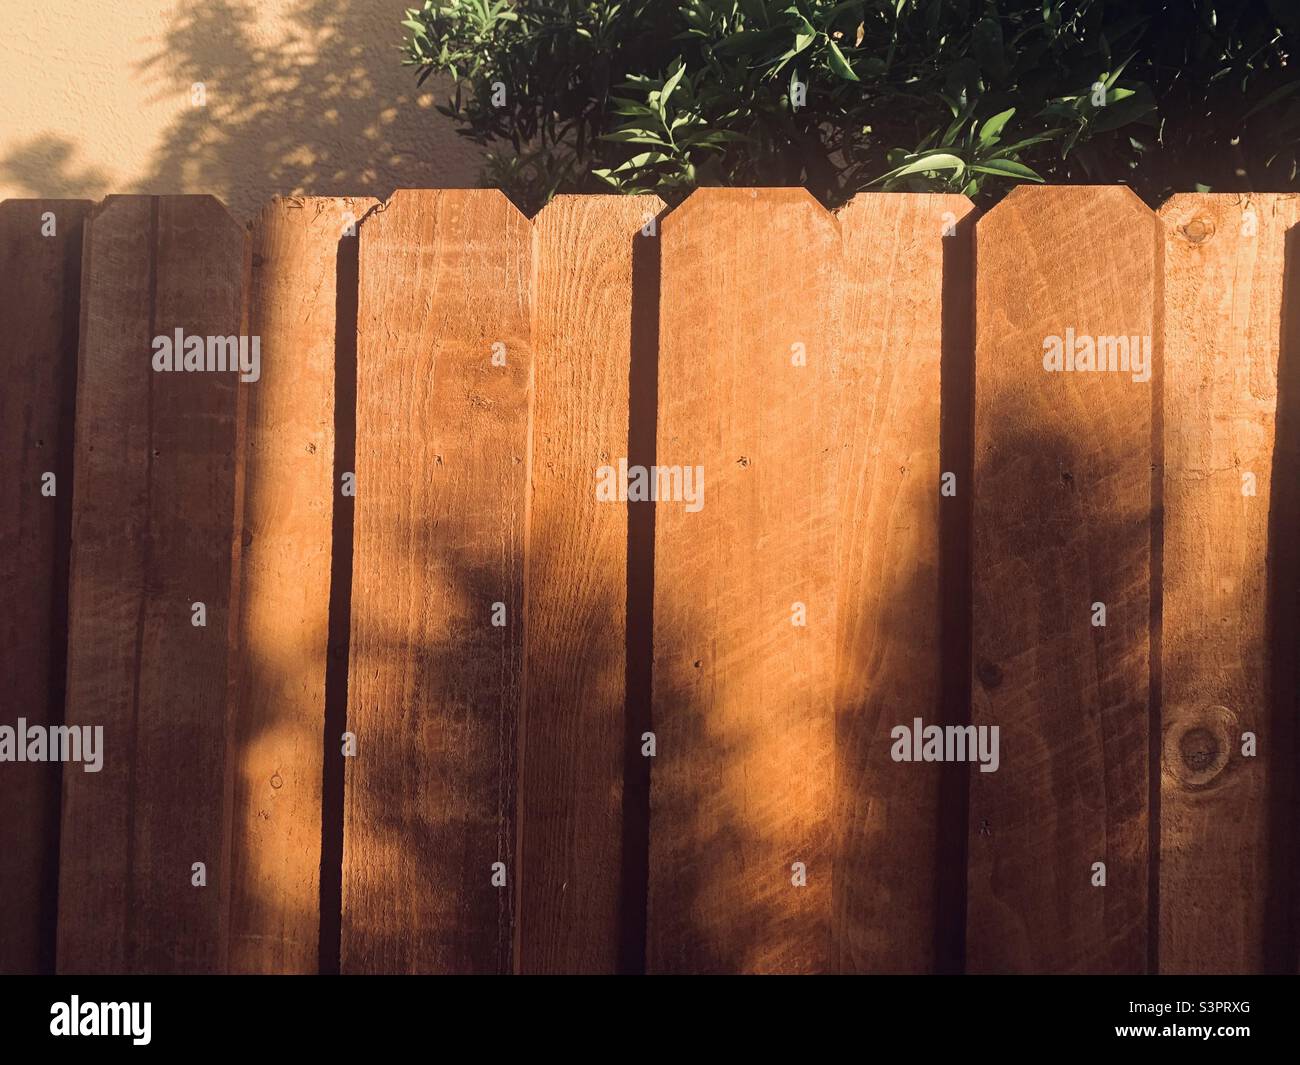 Cedar wooden fence in the yard Stock Photo